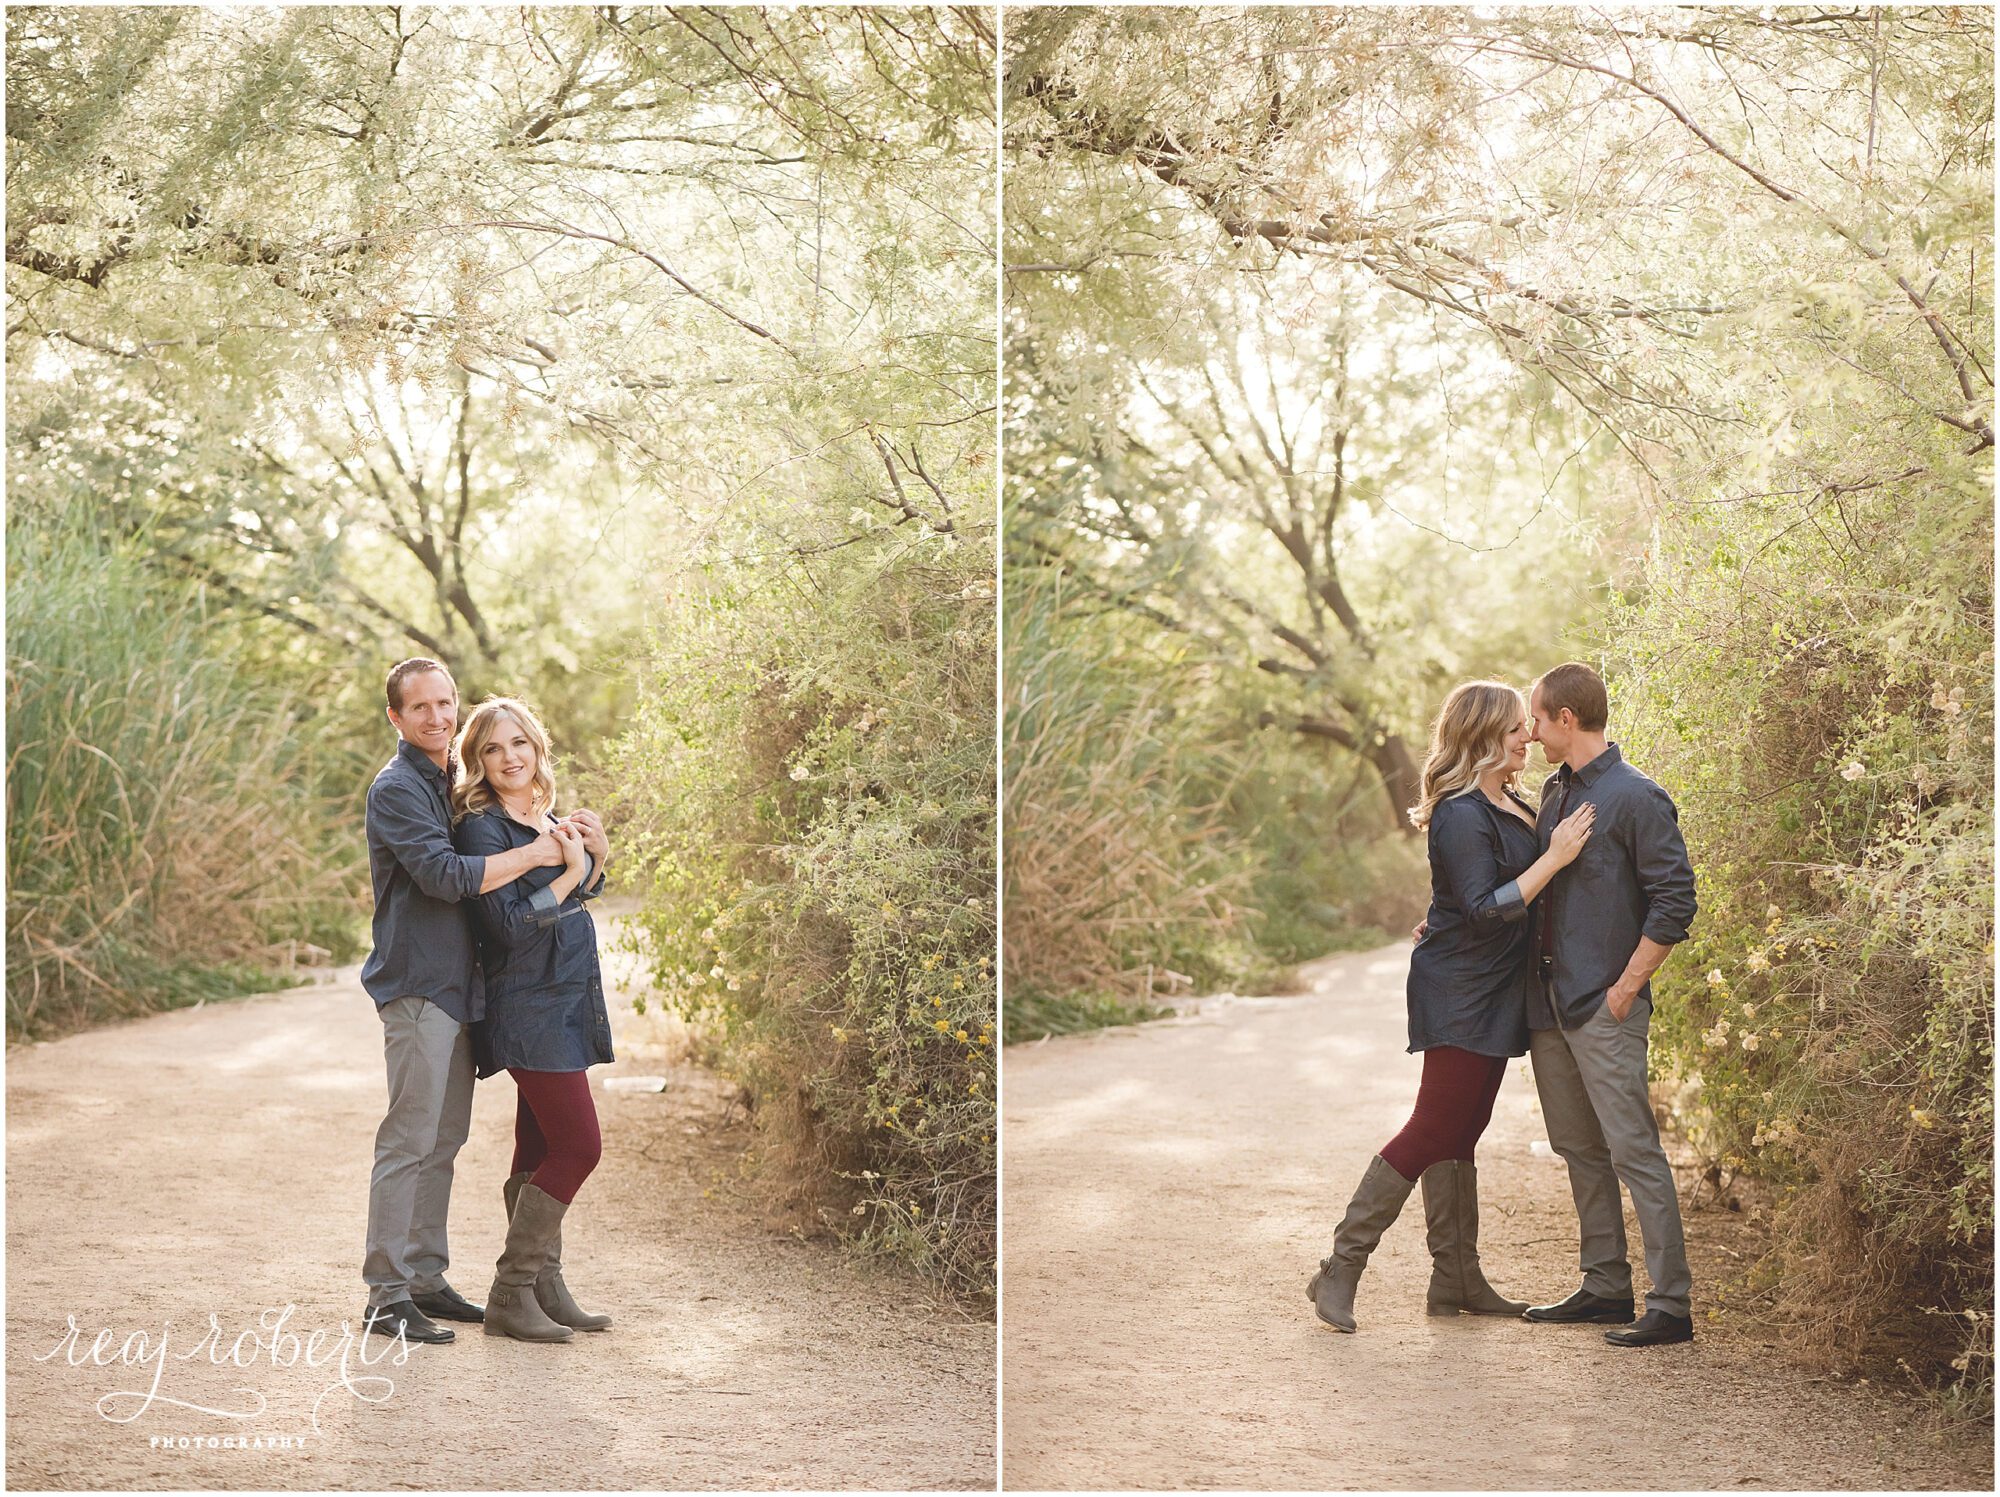 Couple posing | Chandler Family Photographer | Reaj Roberts Photography 